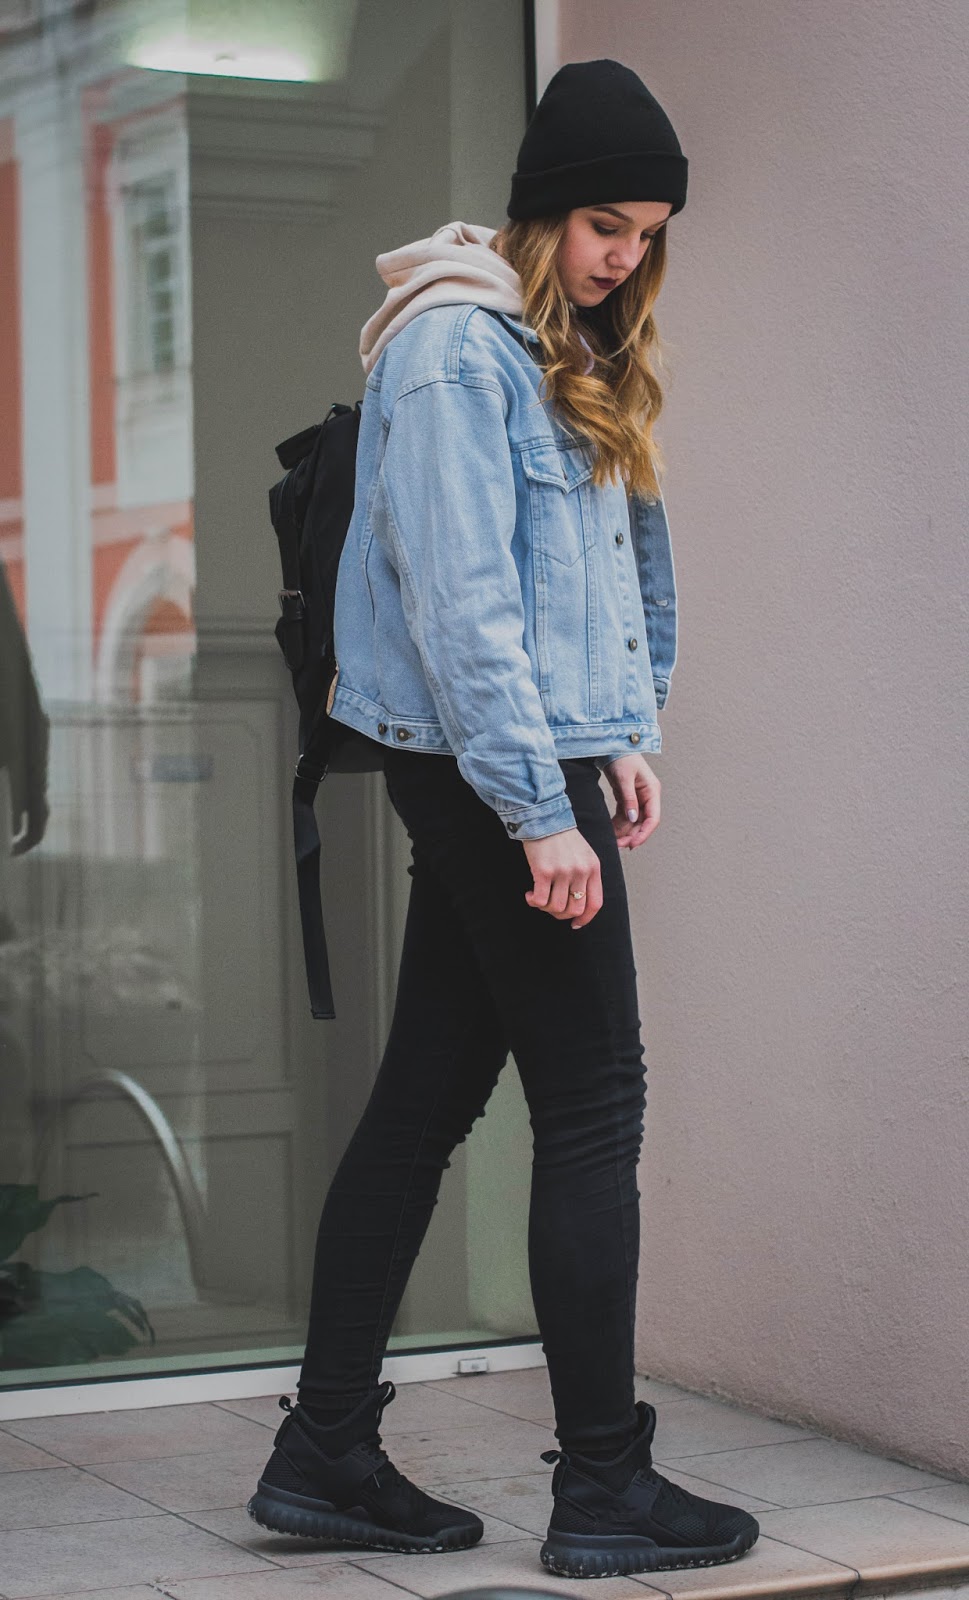 Jeans jacket - Kowalska Kinga